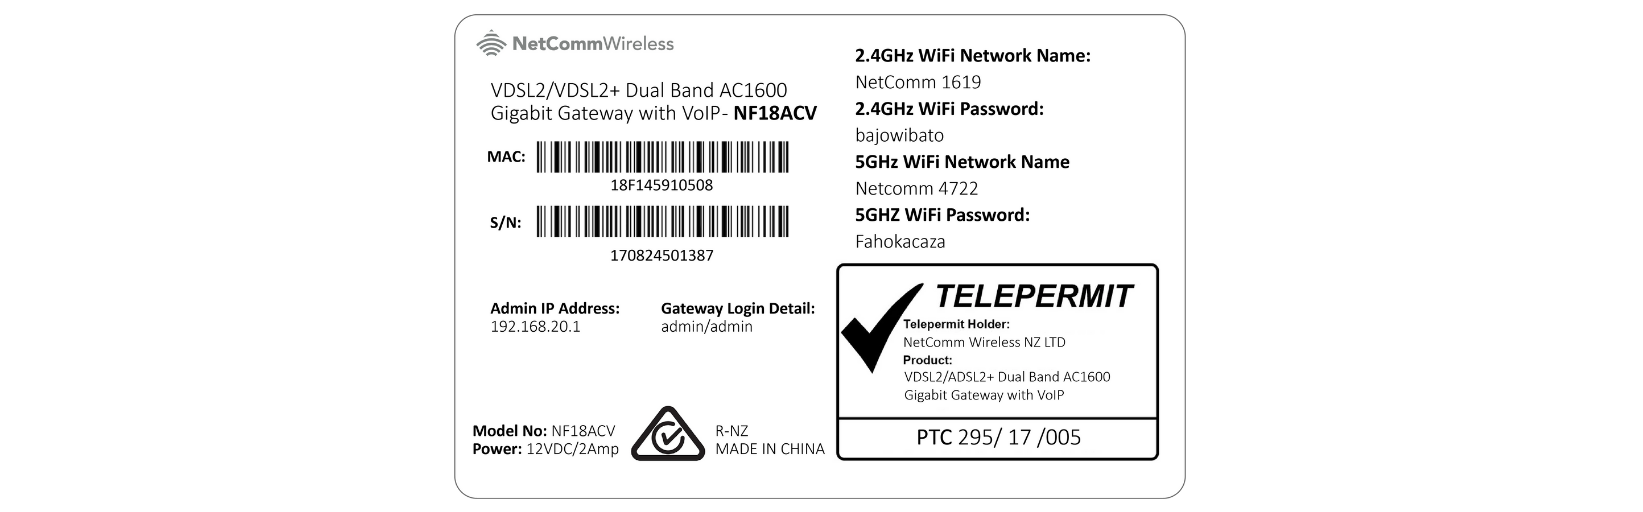 MATE Netcomm Modem Wi Fi details